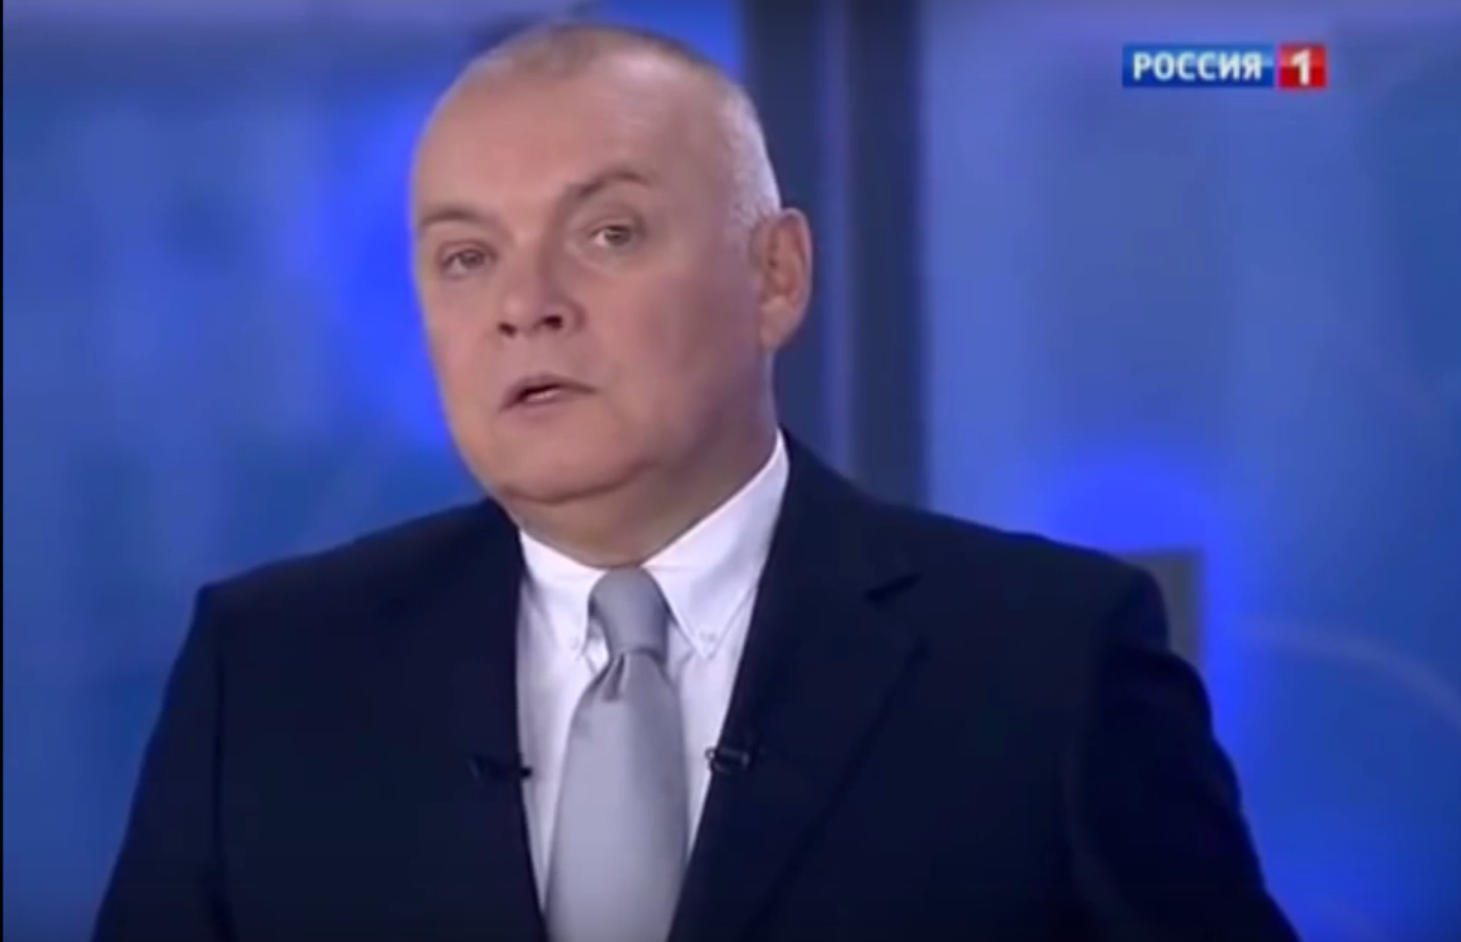 Dmitry Kiseleyov, head of Russia Segonya and popular TV host, is often described as Putin’s key propagandist PHOTO: Rossia1